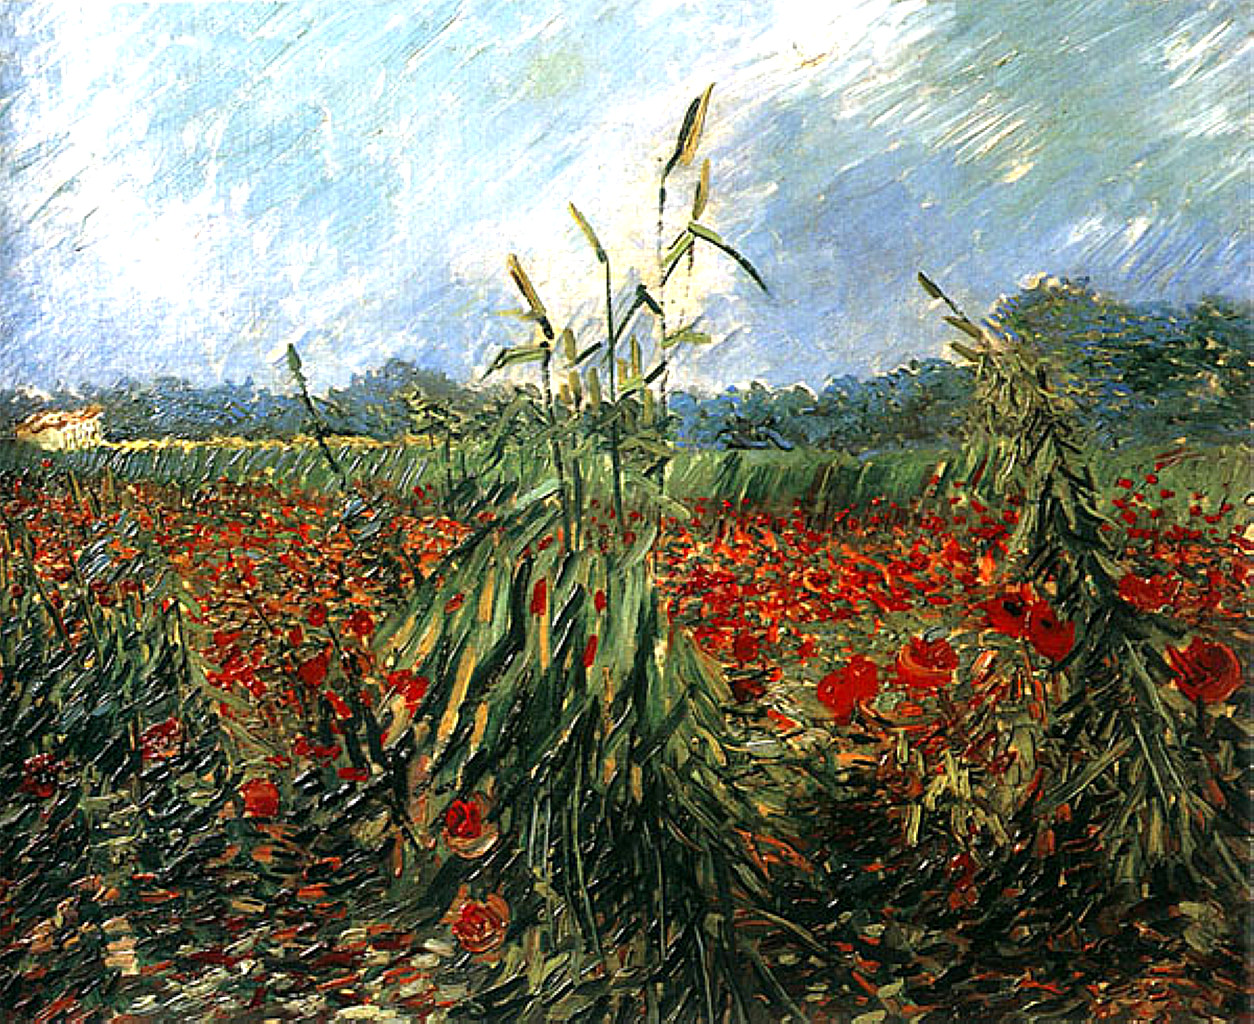 Vincent+Van+Gogh-1853-1890 (777).jpg